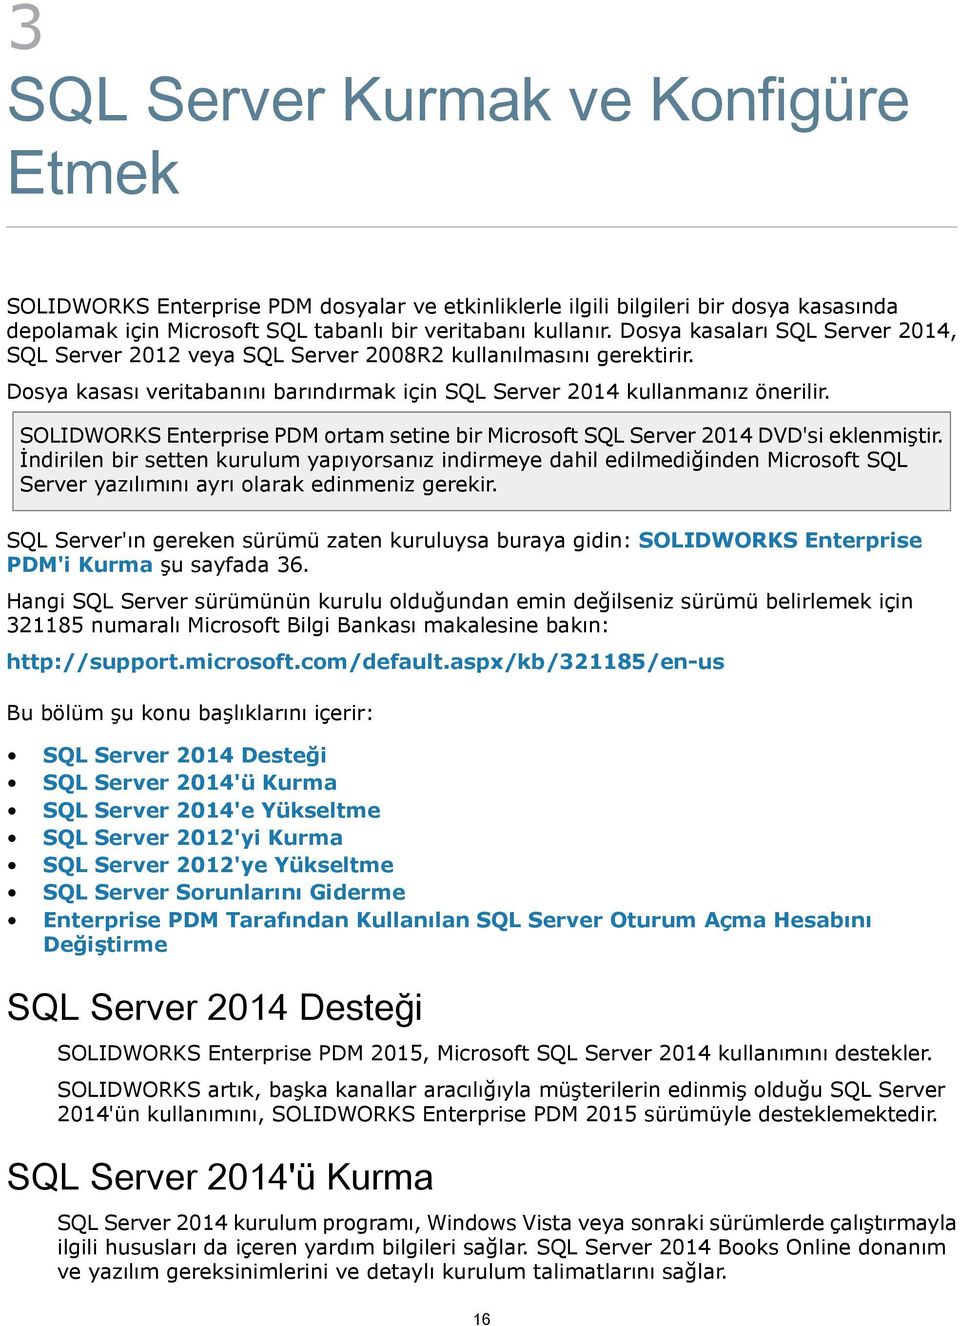 SOLIDWORKS Enterprise PDM ortam setine bir Microsoft SQL Server 2014 DVD'si eklenmiştir.